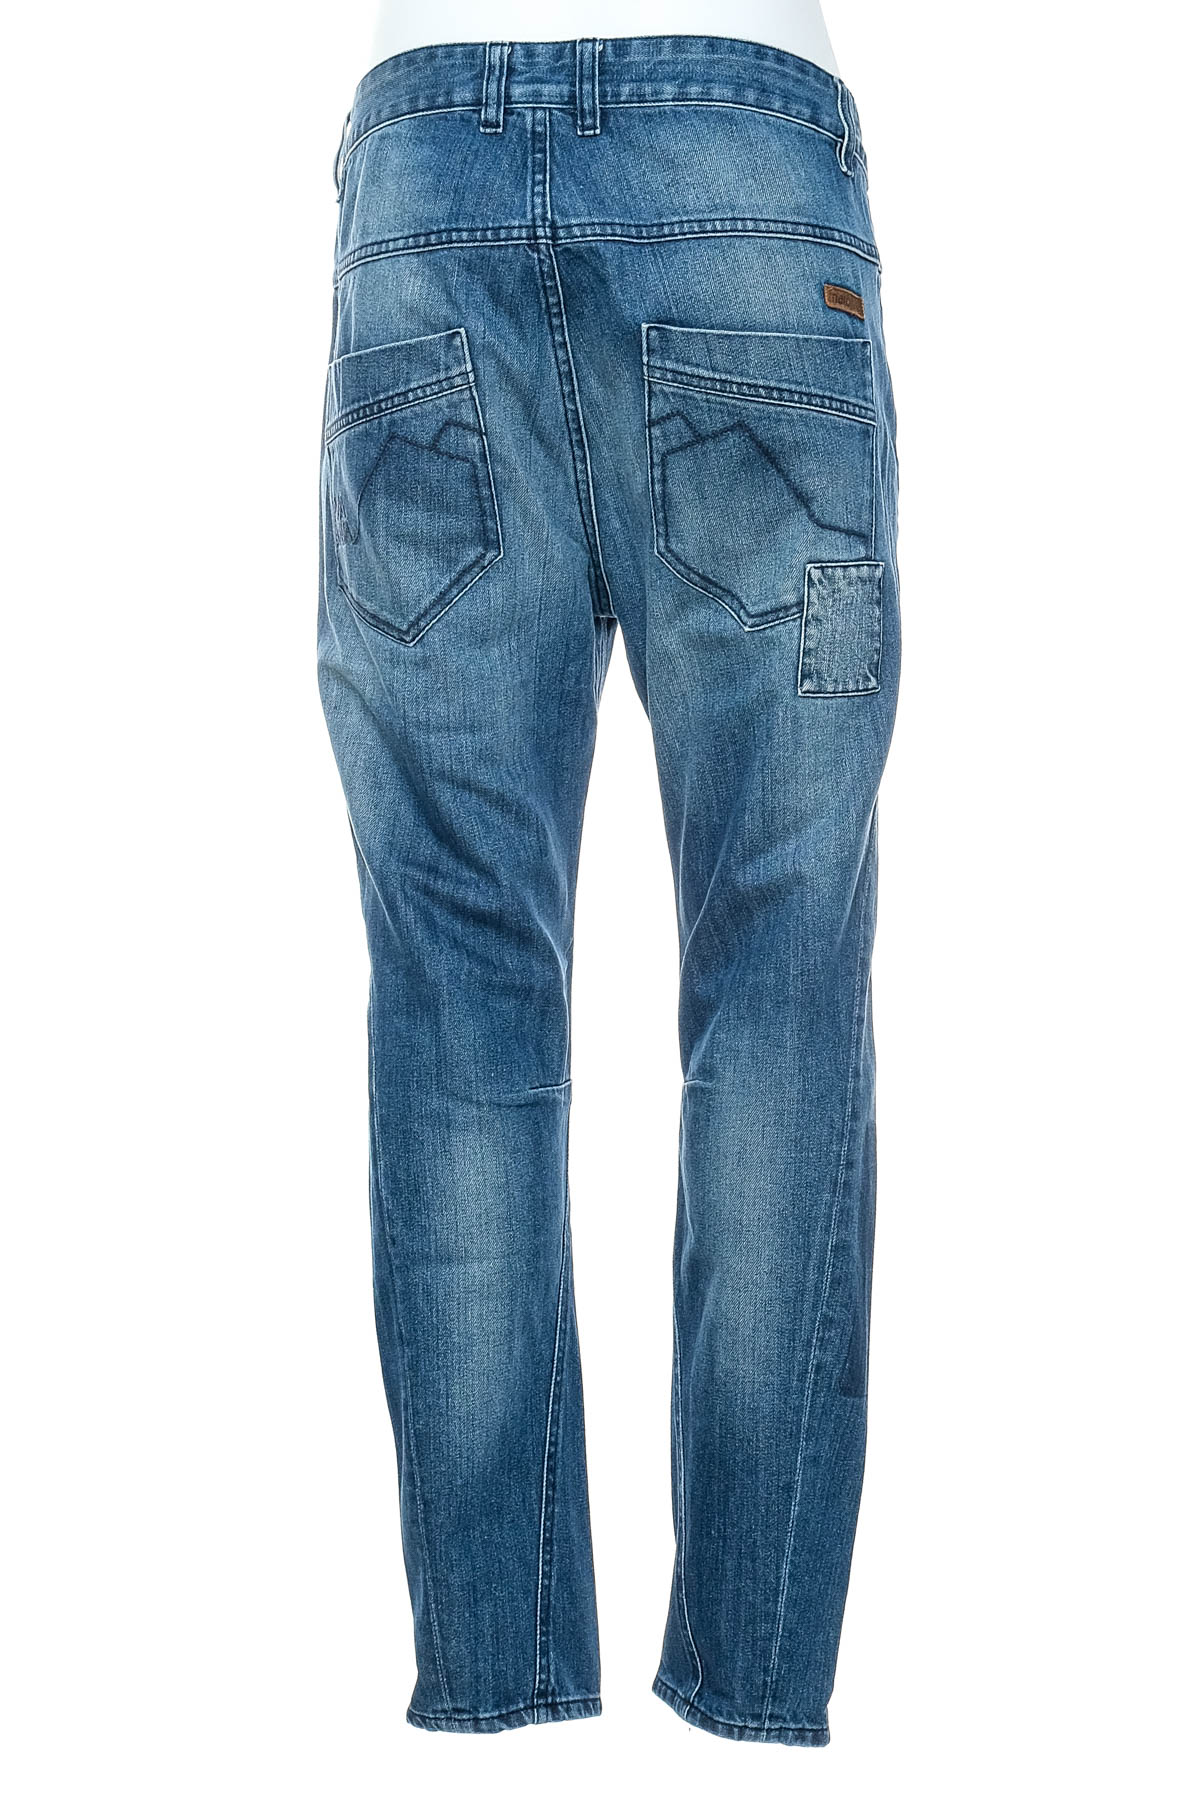 Men's jeans - Maloja - 1